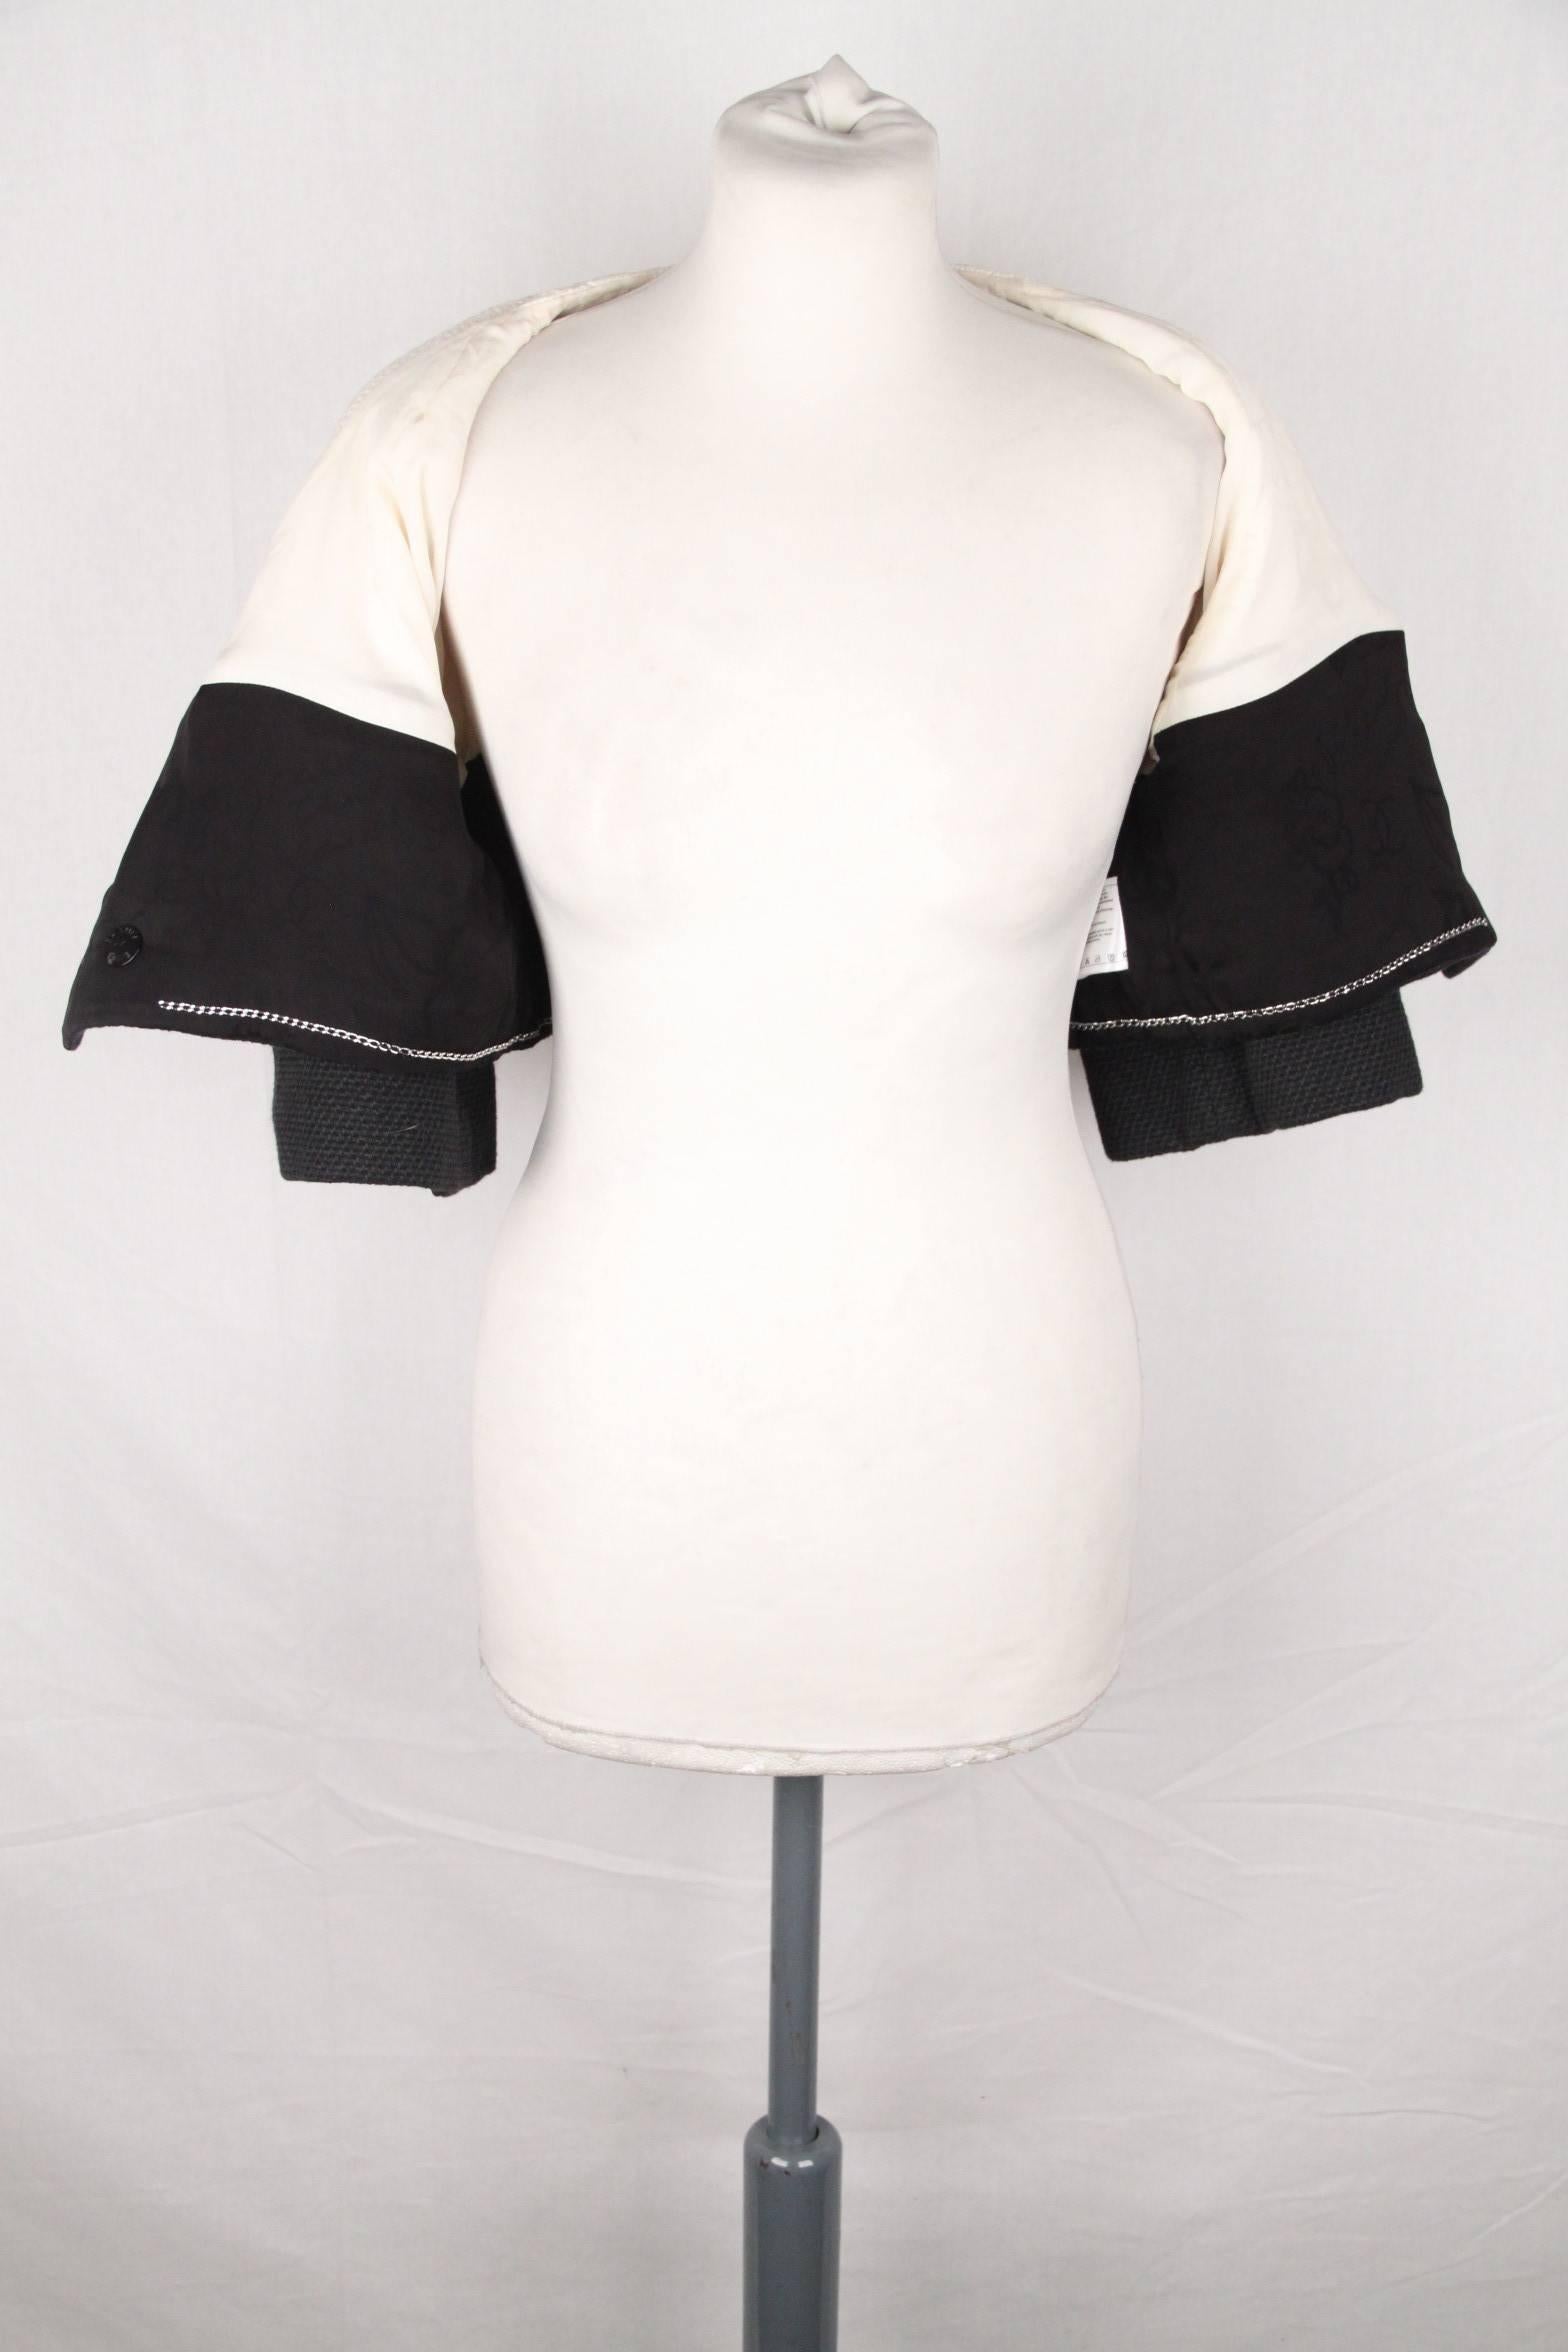 CHANEL Black & White Cotton Blend CROPPED JACKET Size 40 2